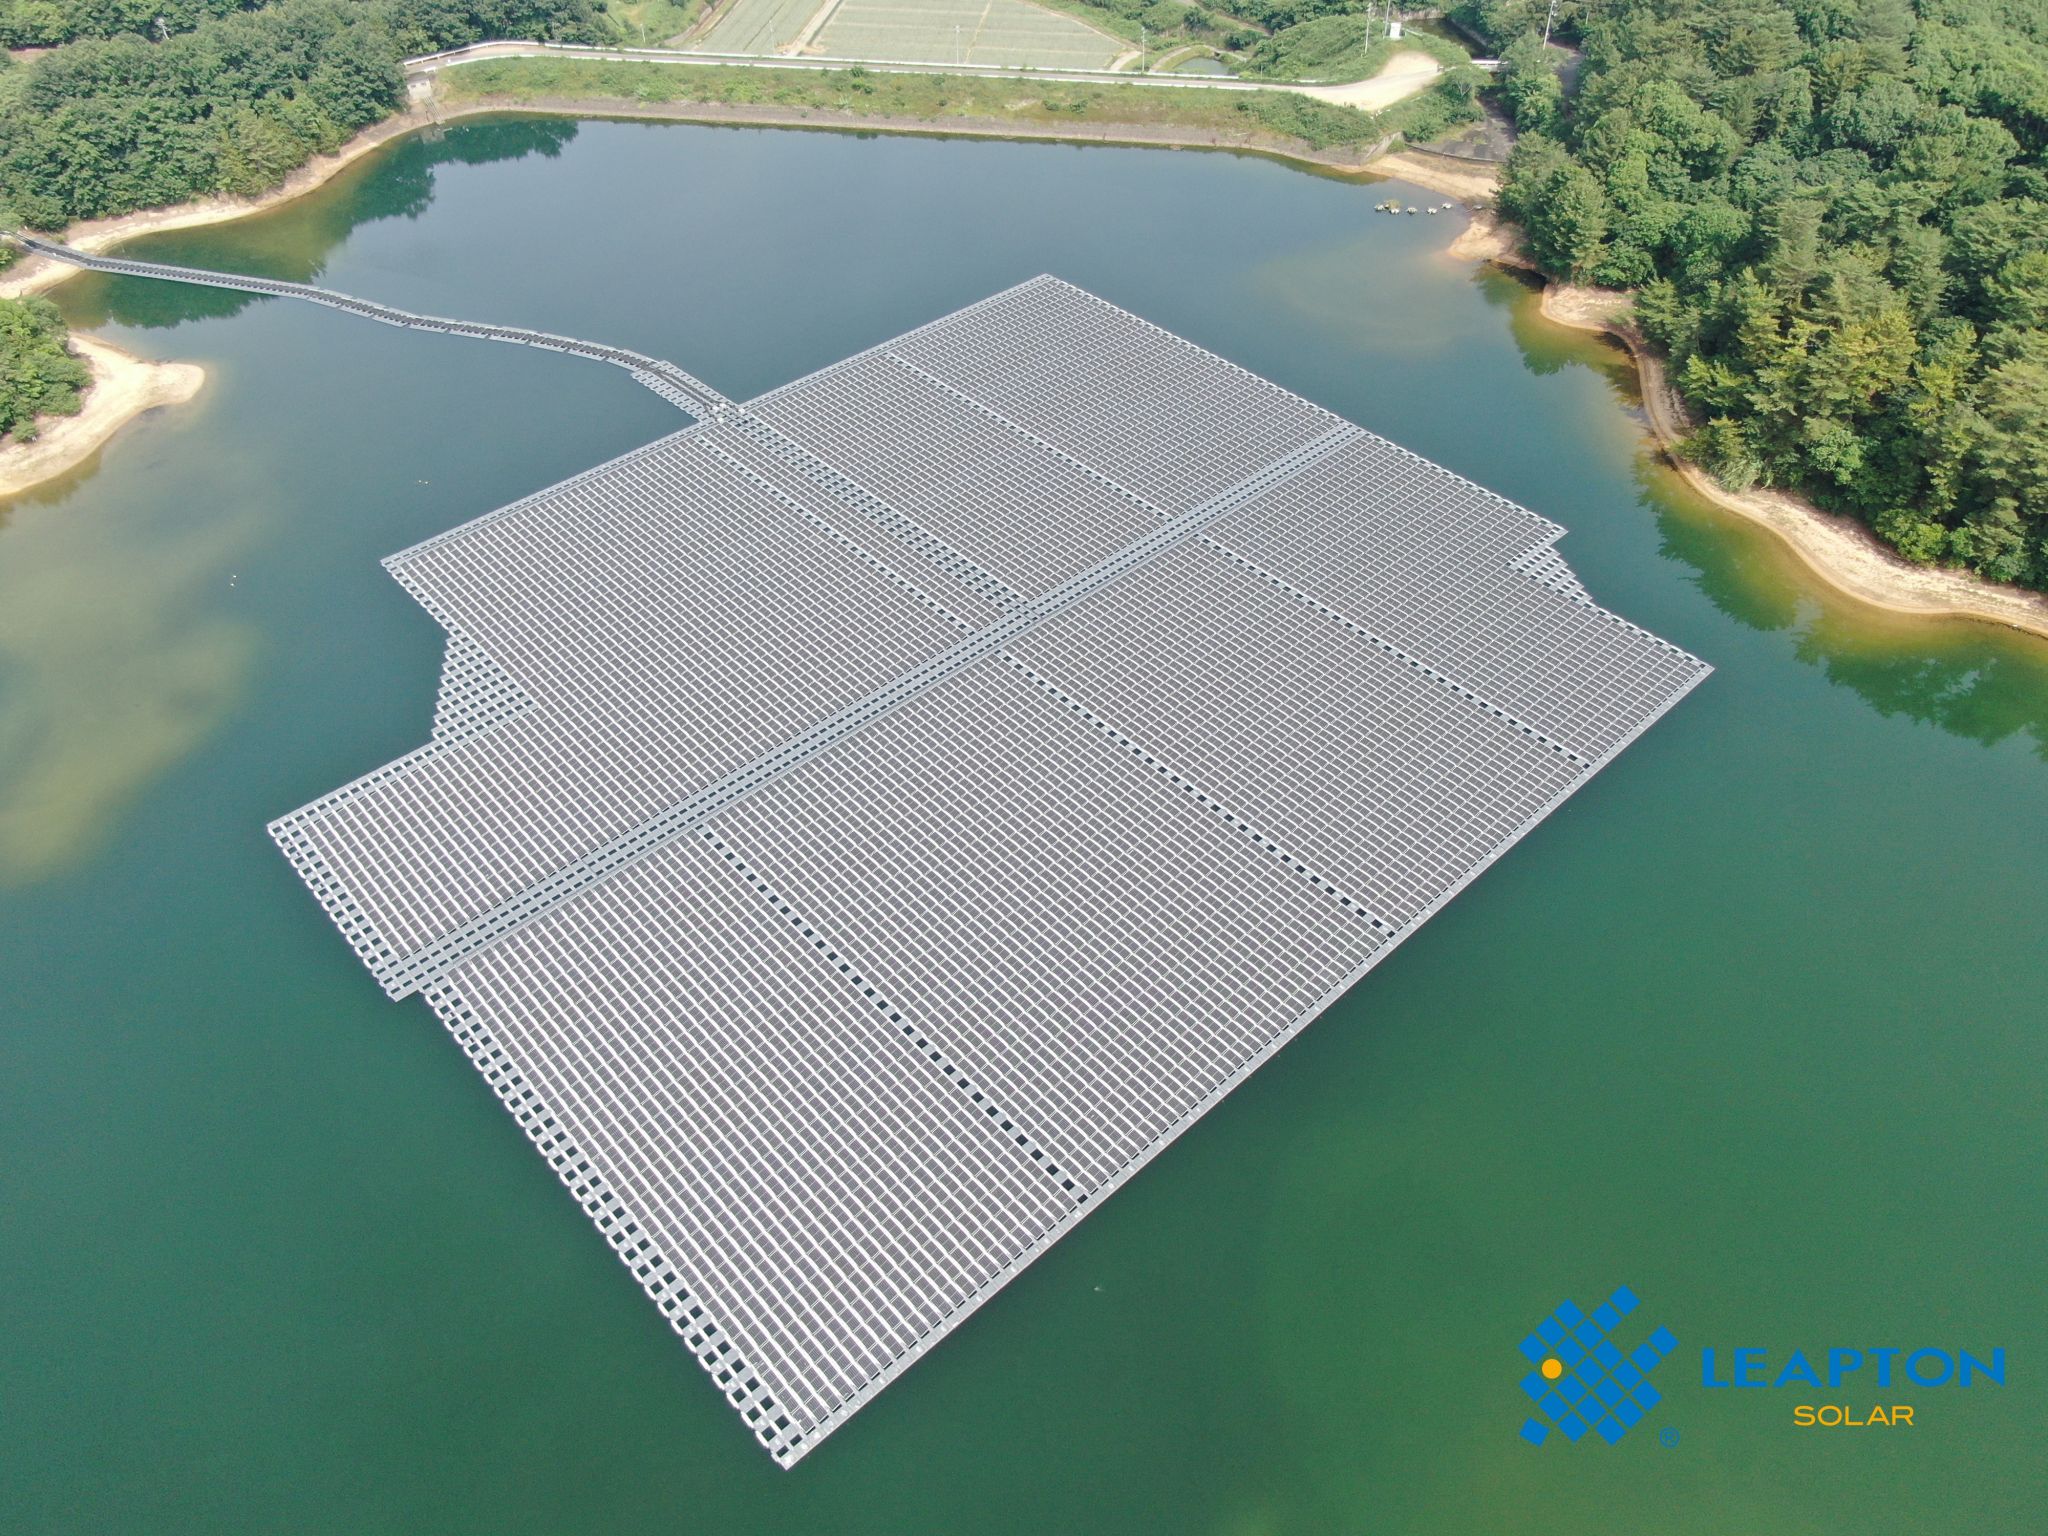 Leapton energy 2.8 MW floating solar plant project finished 